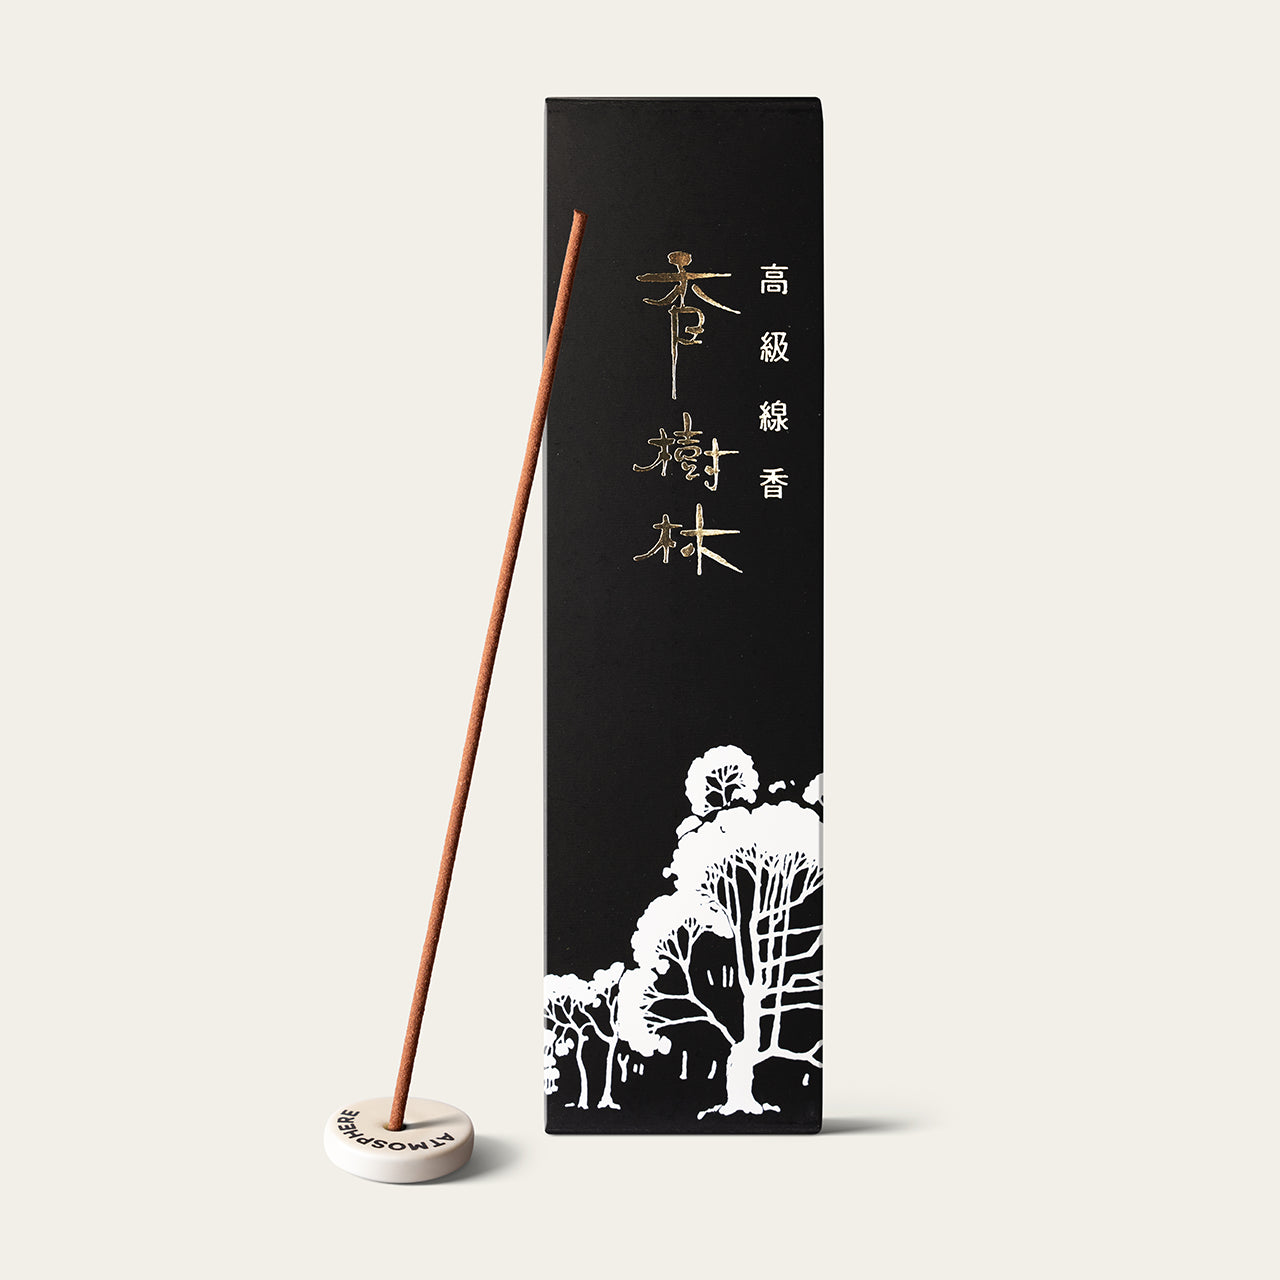 Gyokushodo Kojurin Japanese incense sticks (100 sticks) with Atmosphere ceramic incense holder